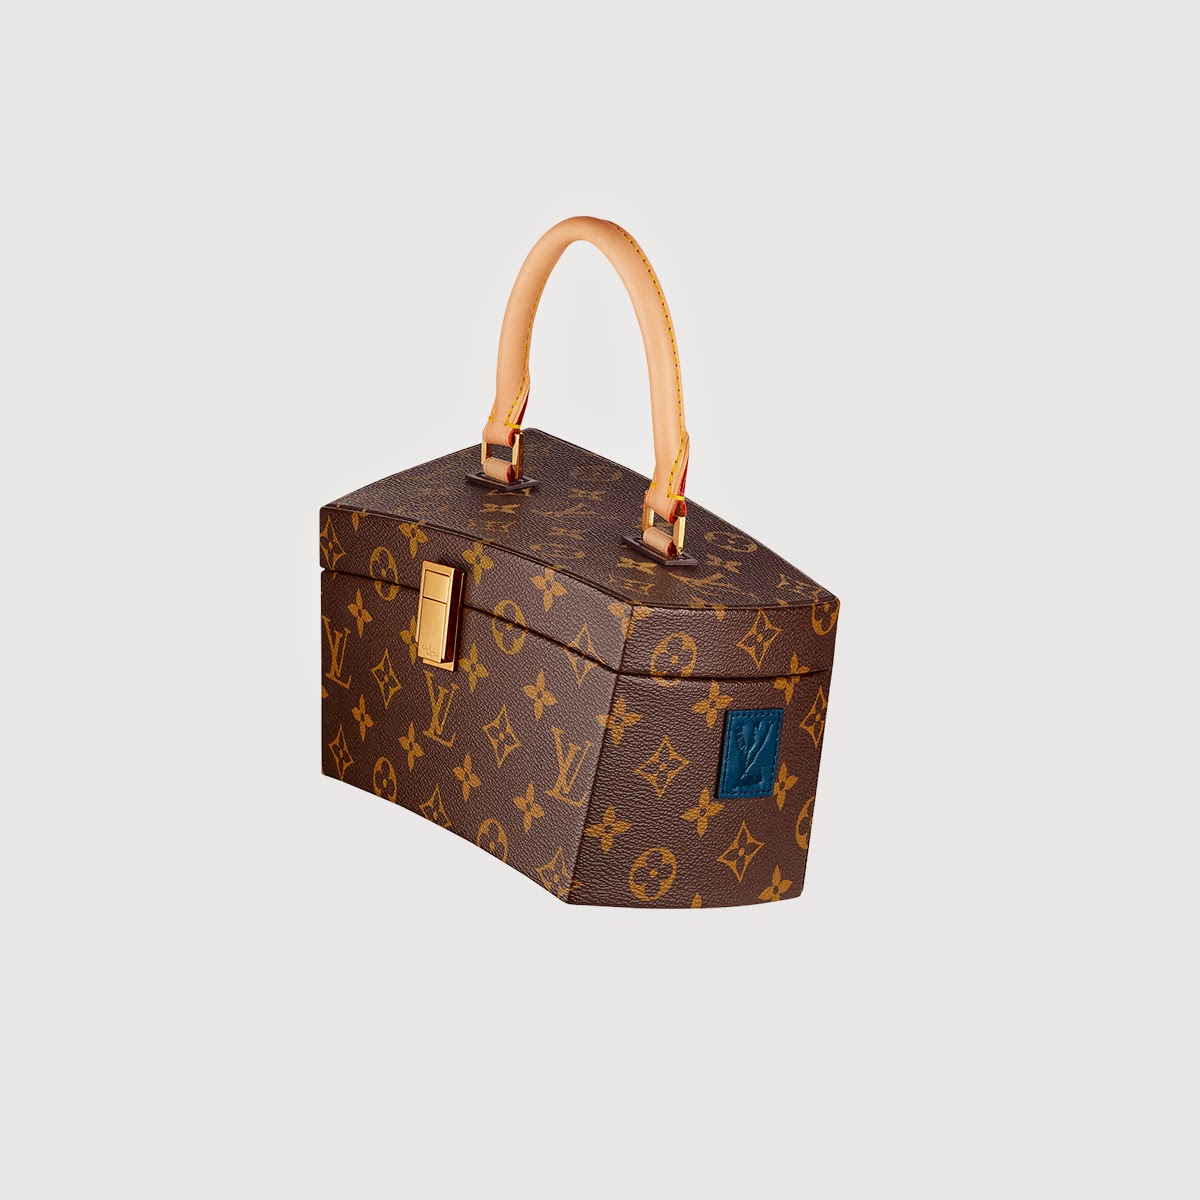 Shanina-Shaik-Louis-Vuitton-Monogram-Keepall-Bag  Louis vuitton handbags,  Fashion, Vintage louis vuitton handbags